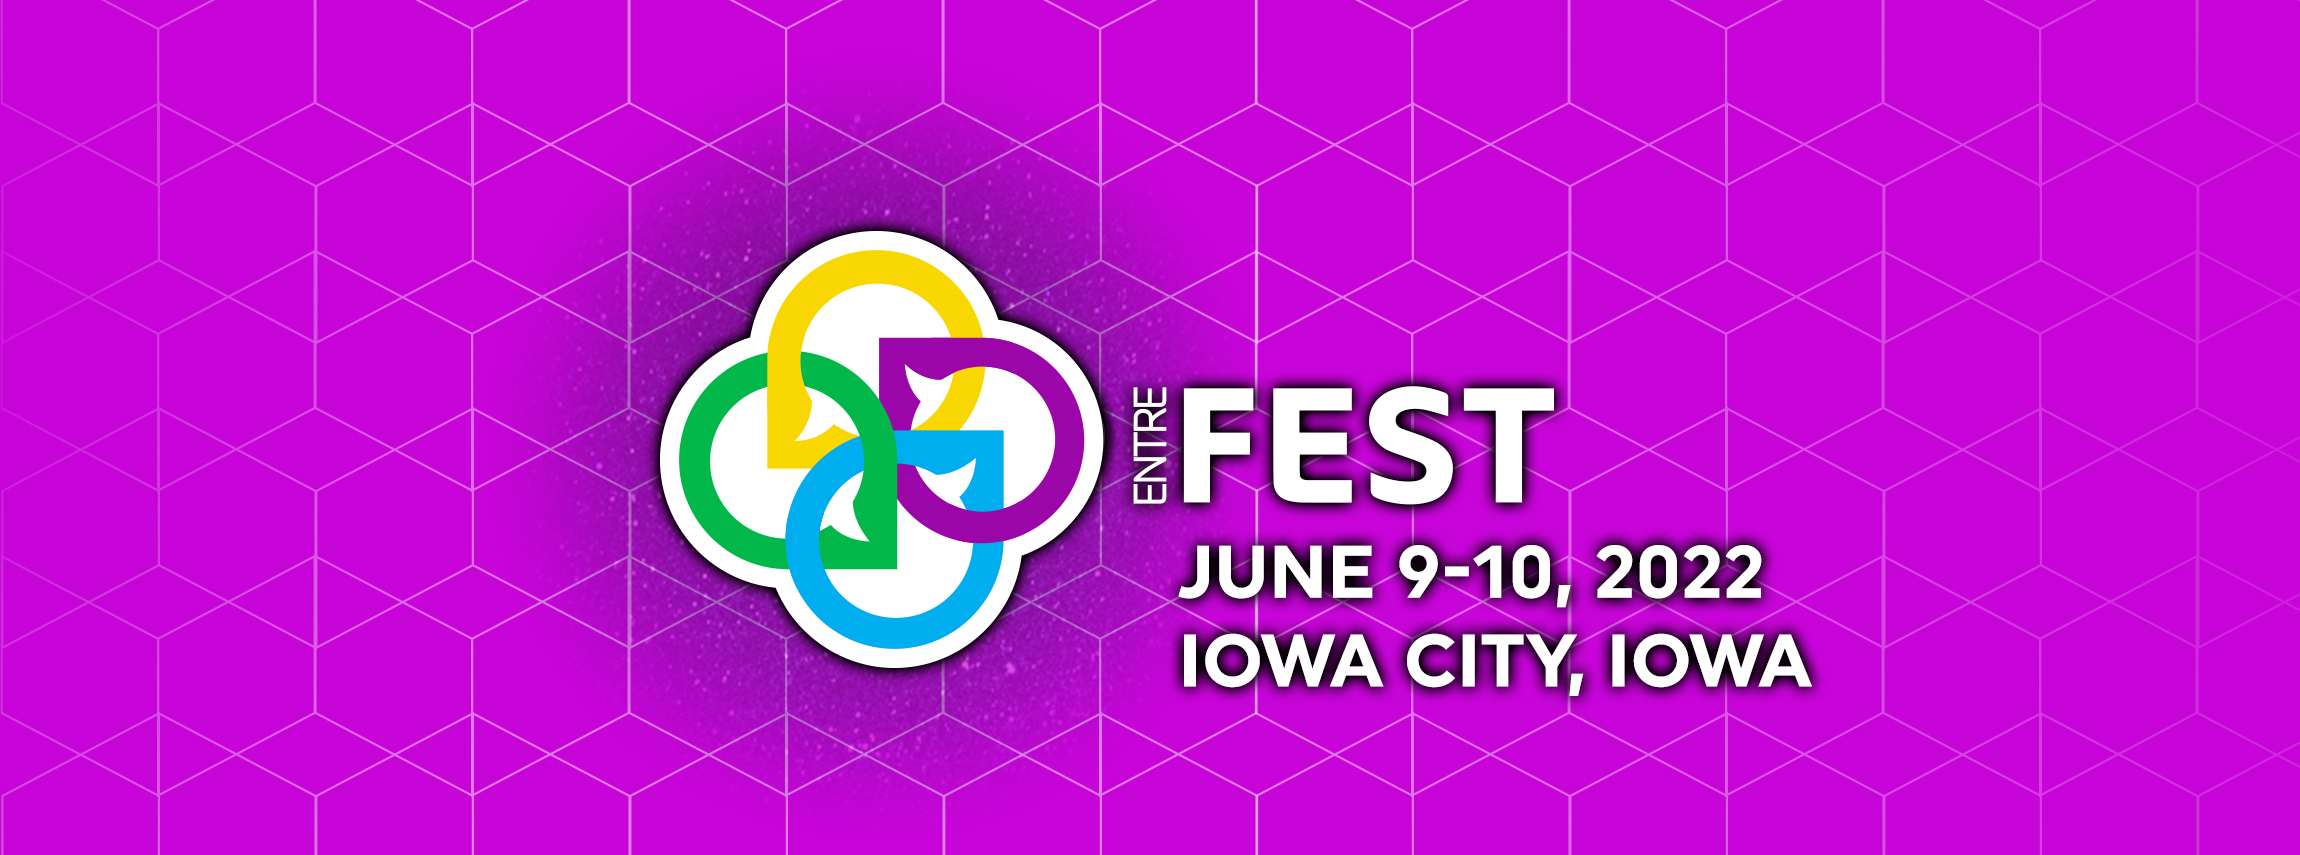 Presented by NewBoCo, EntreFEST 2022 returns to Iowa City, Iowa from June 9-12!